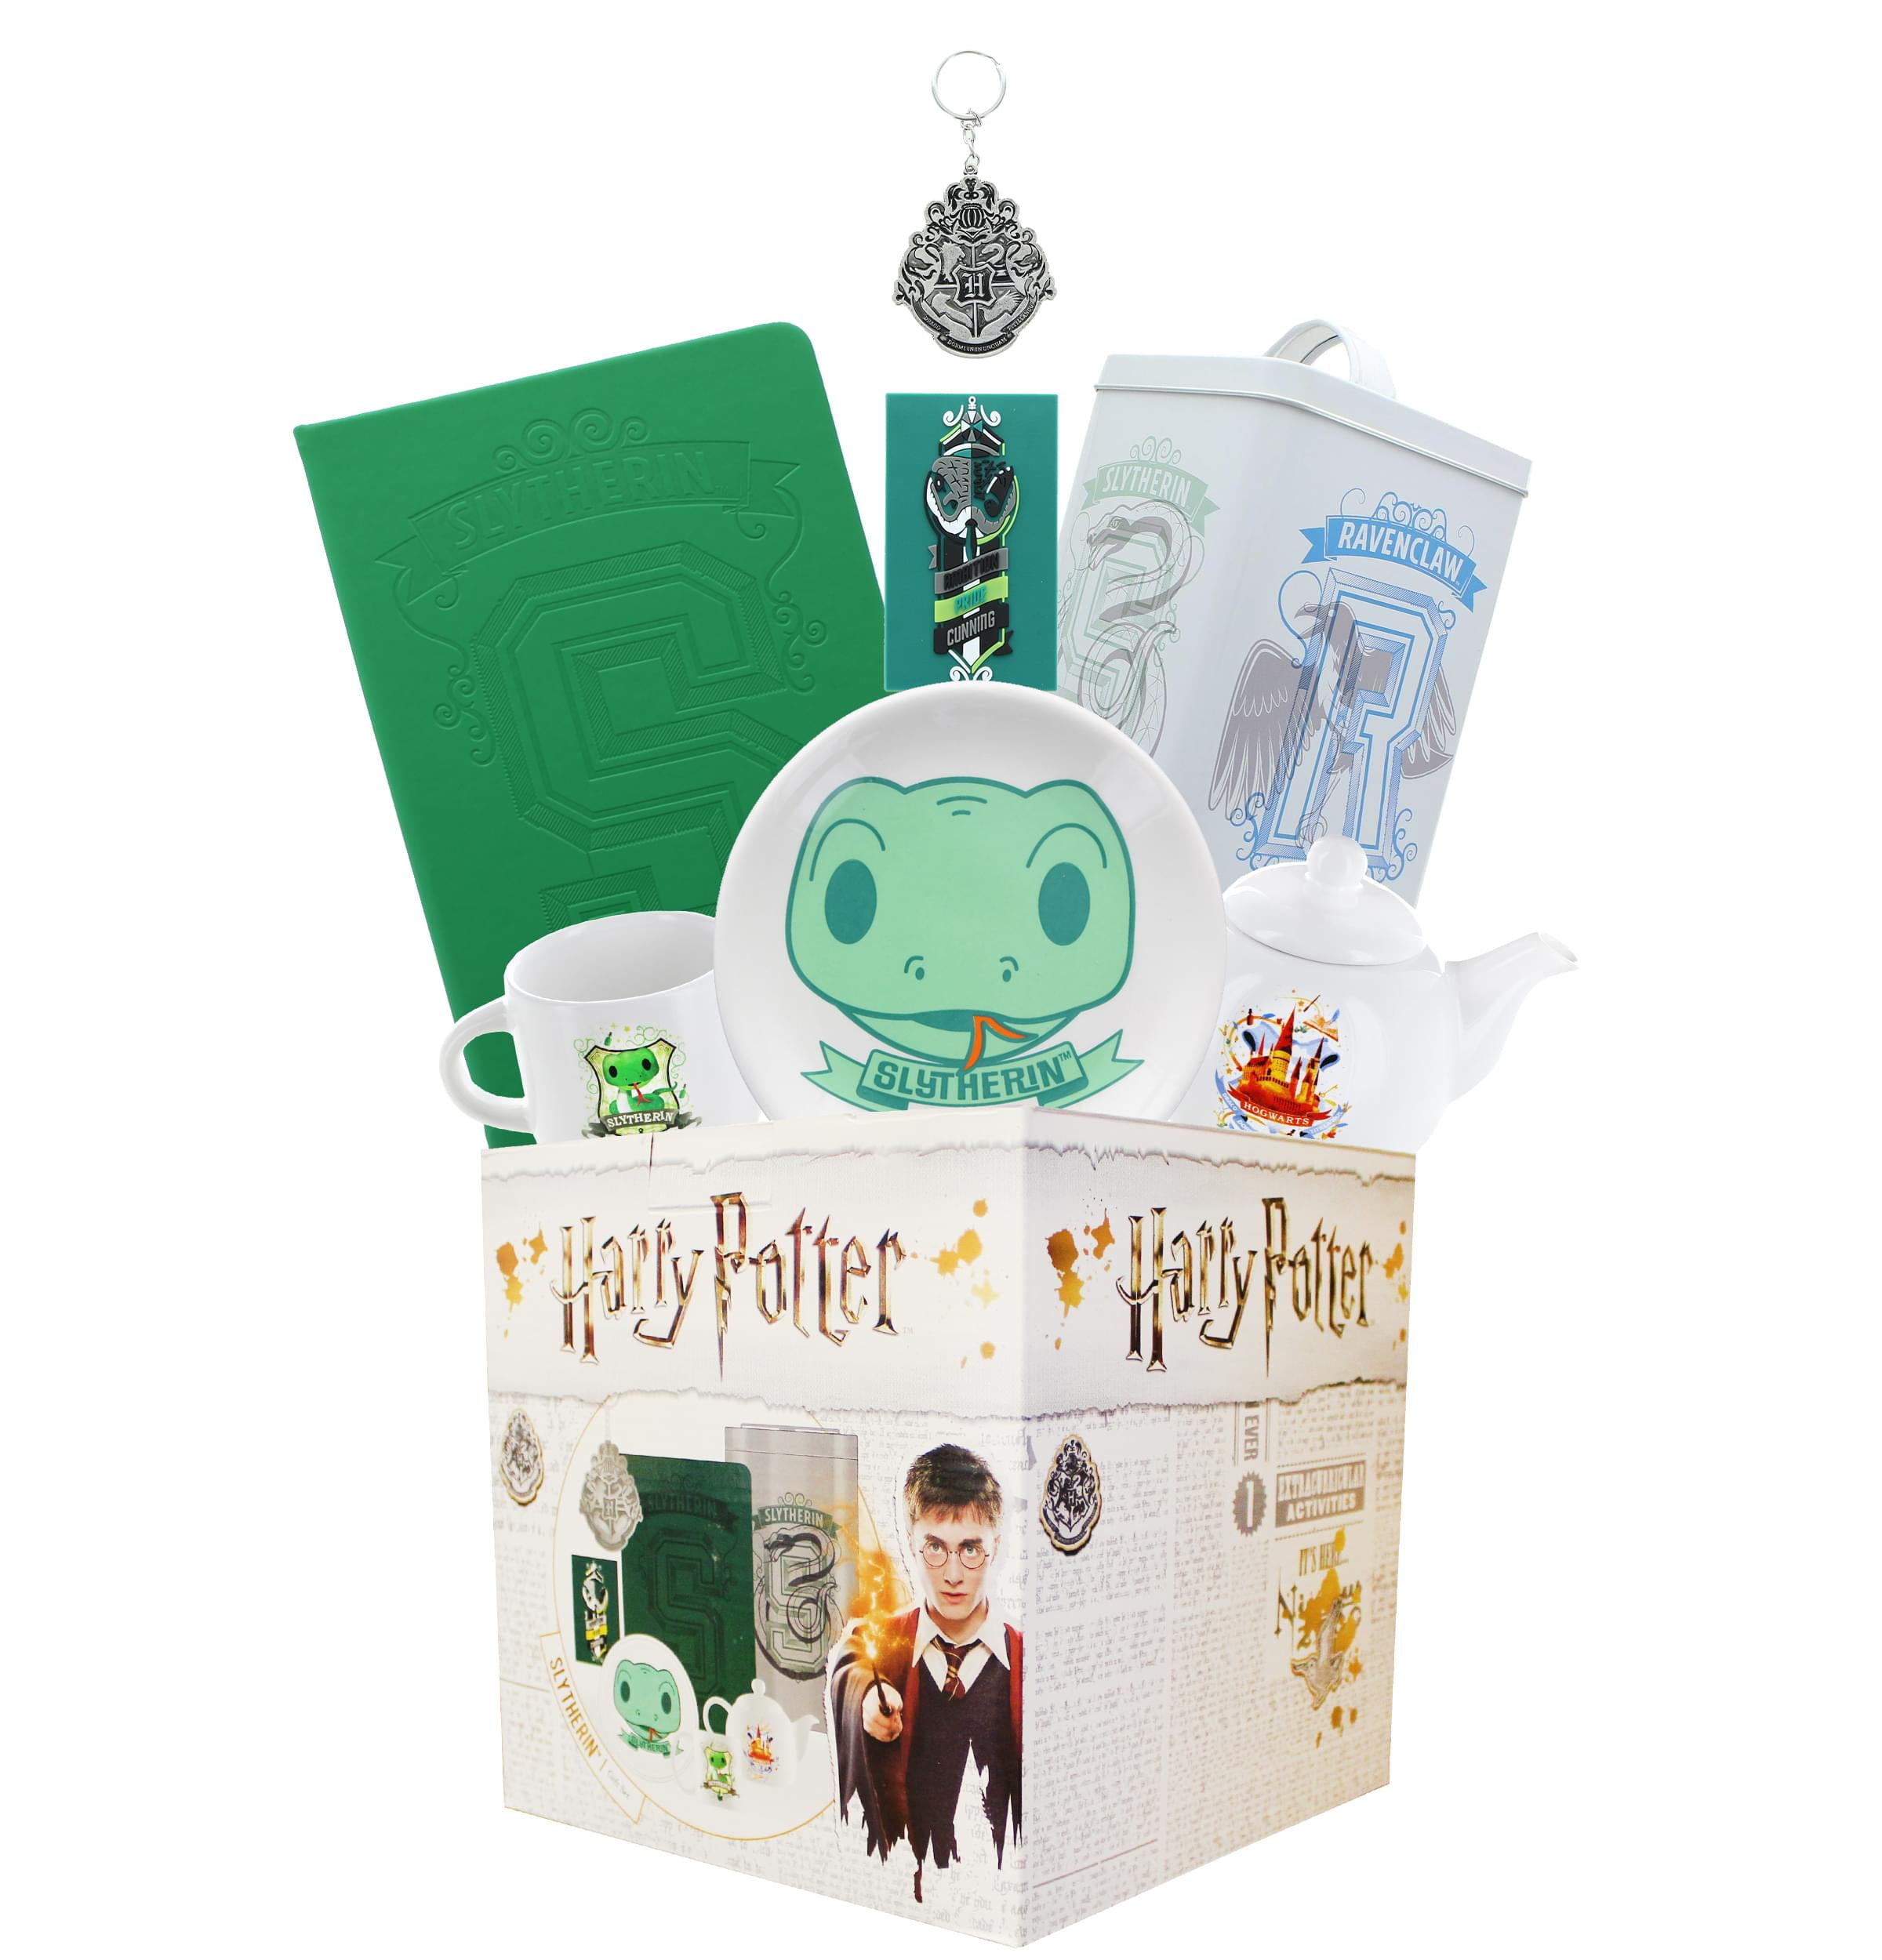 Harry Potter Slytherin House playing cards-un grand cadeau pour Harry Potter fans 